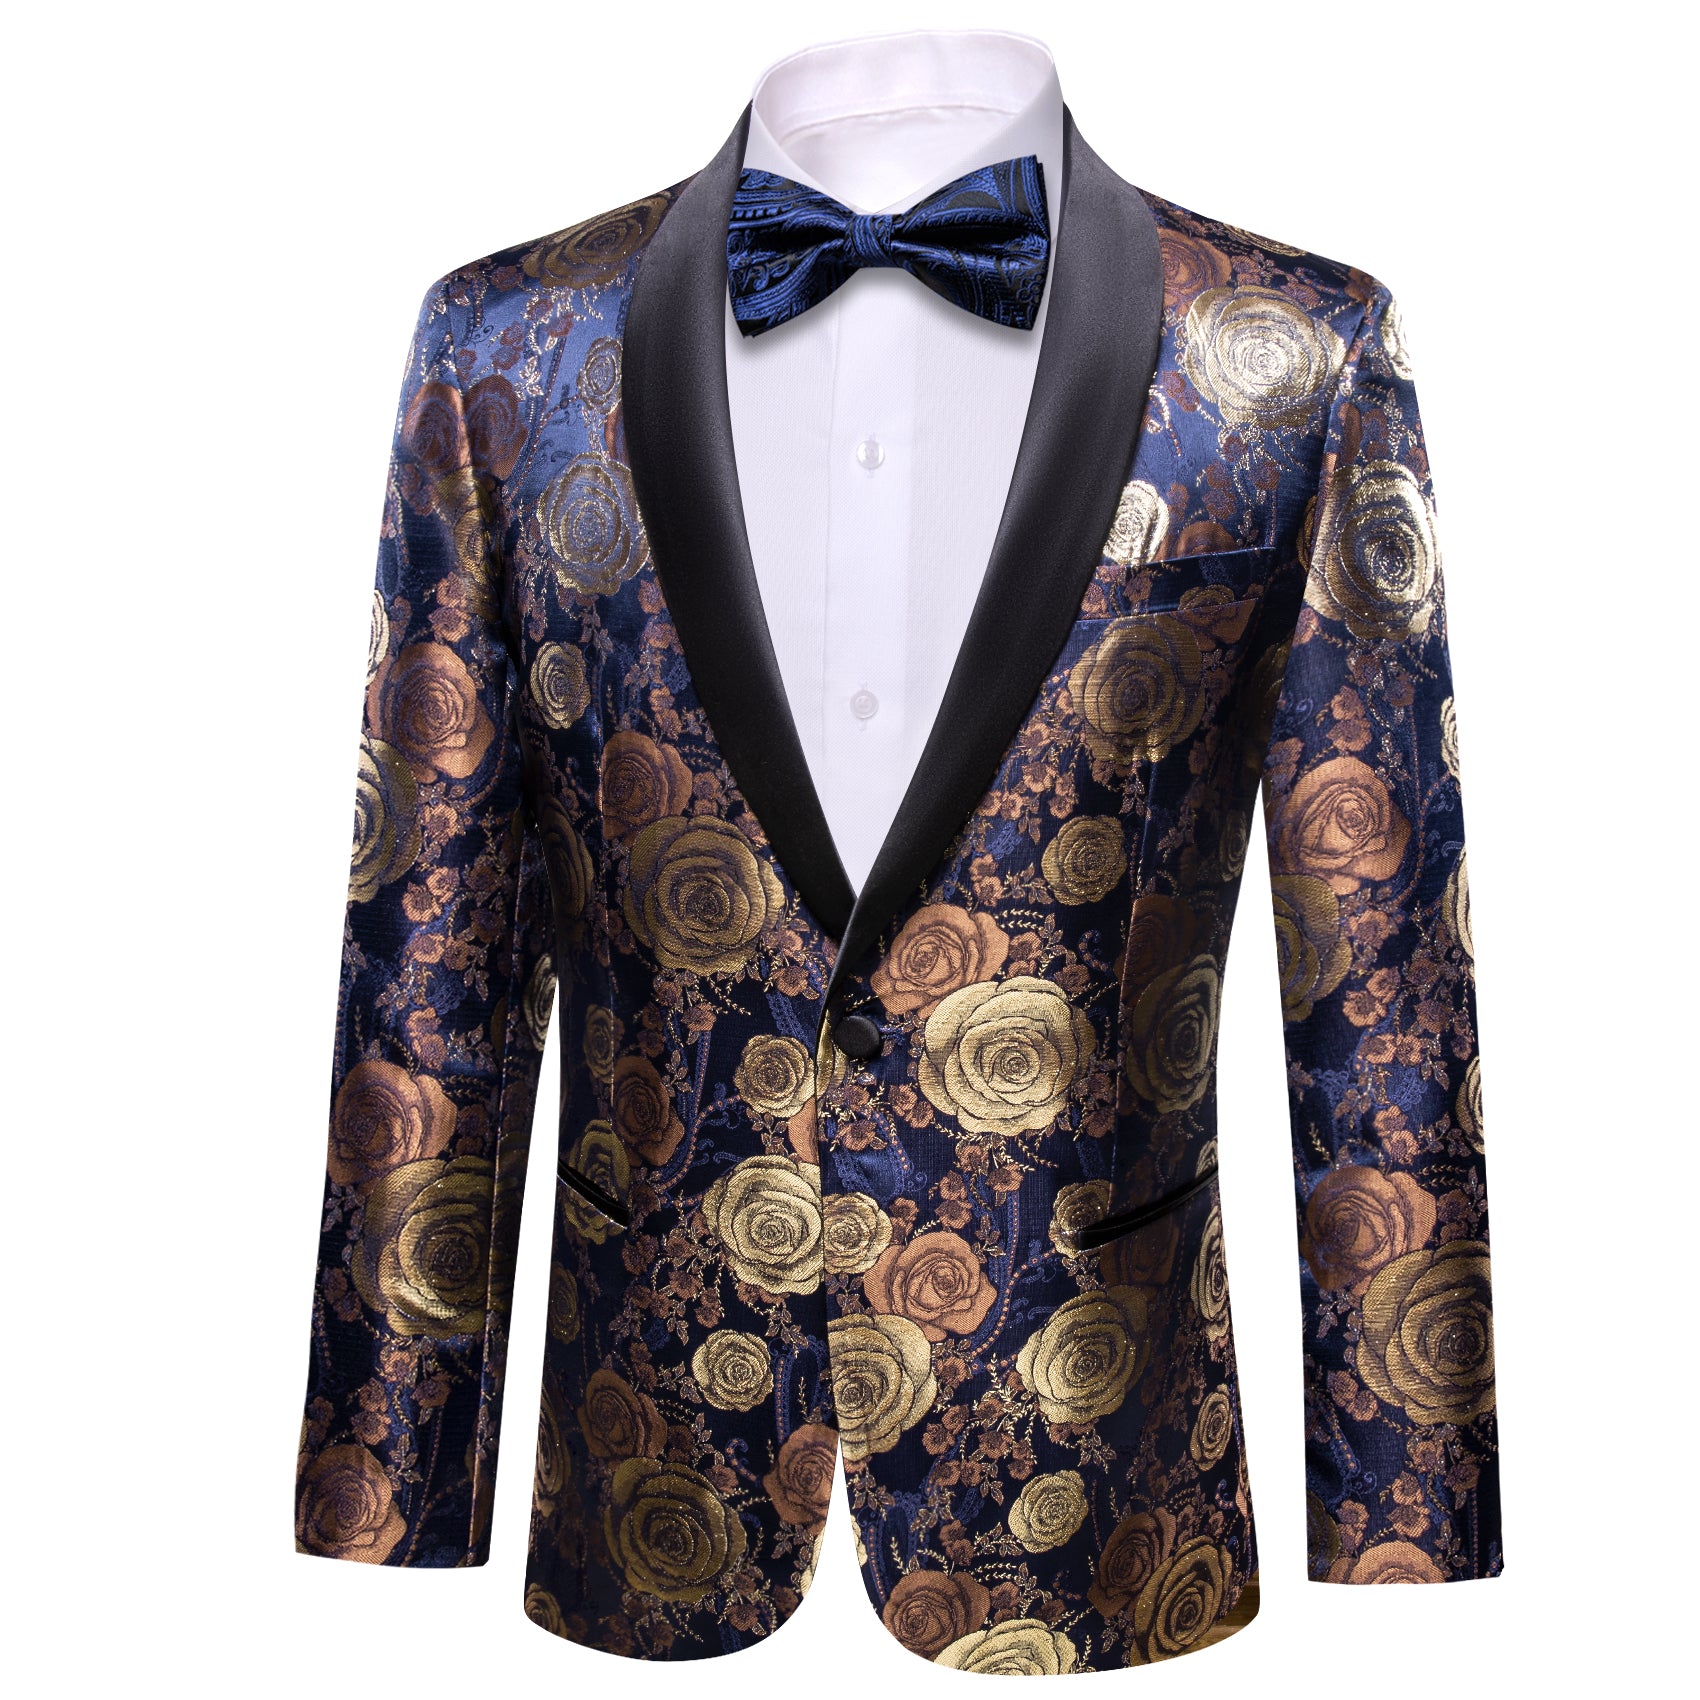 Men's Dress Party Blue Brown Flower Suit Jacket Slim One Button Stylish Blazer